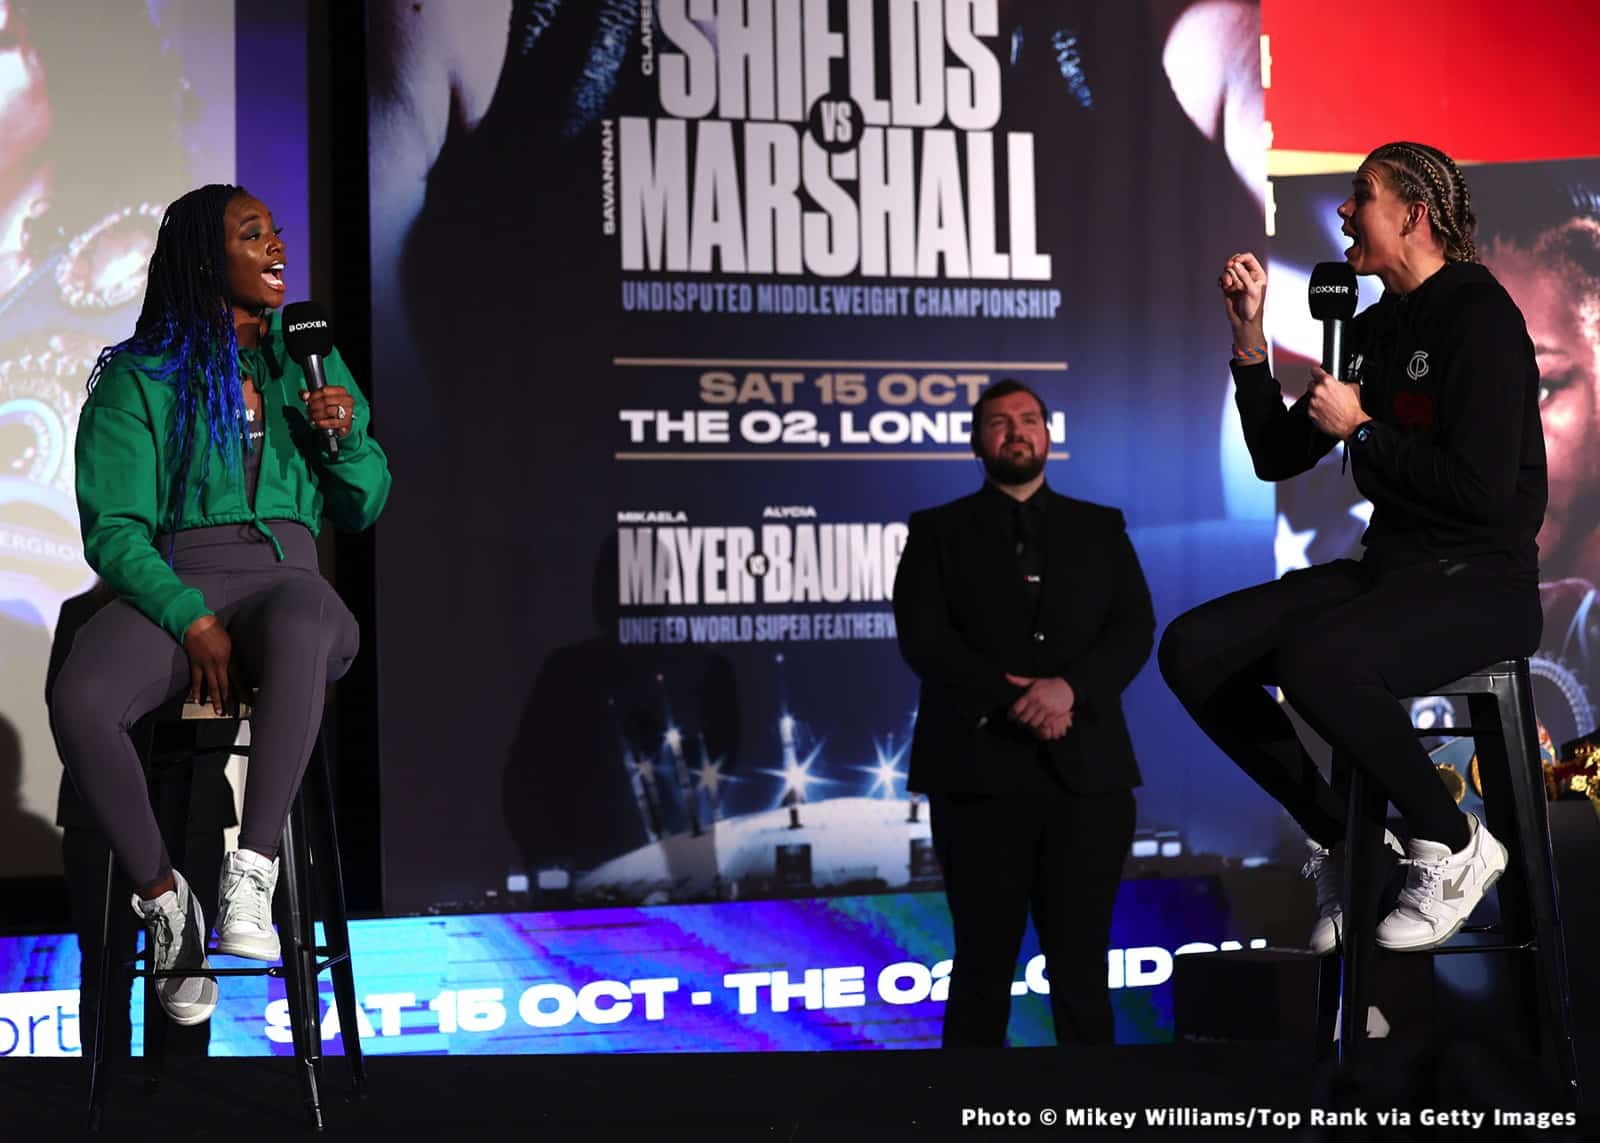 Image: Marshall vs Shields, Mayer vs Baumgardner Final Sky / ESPN Quotes & Photos